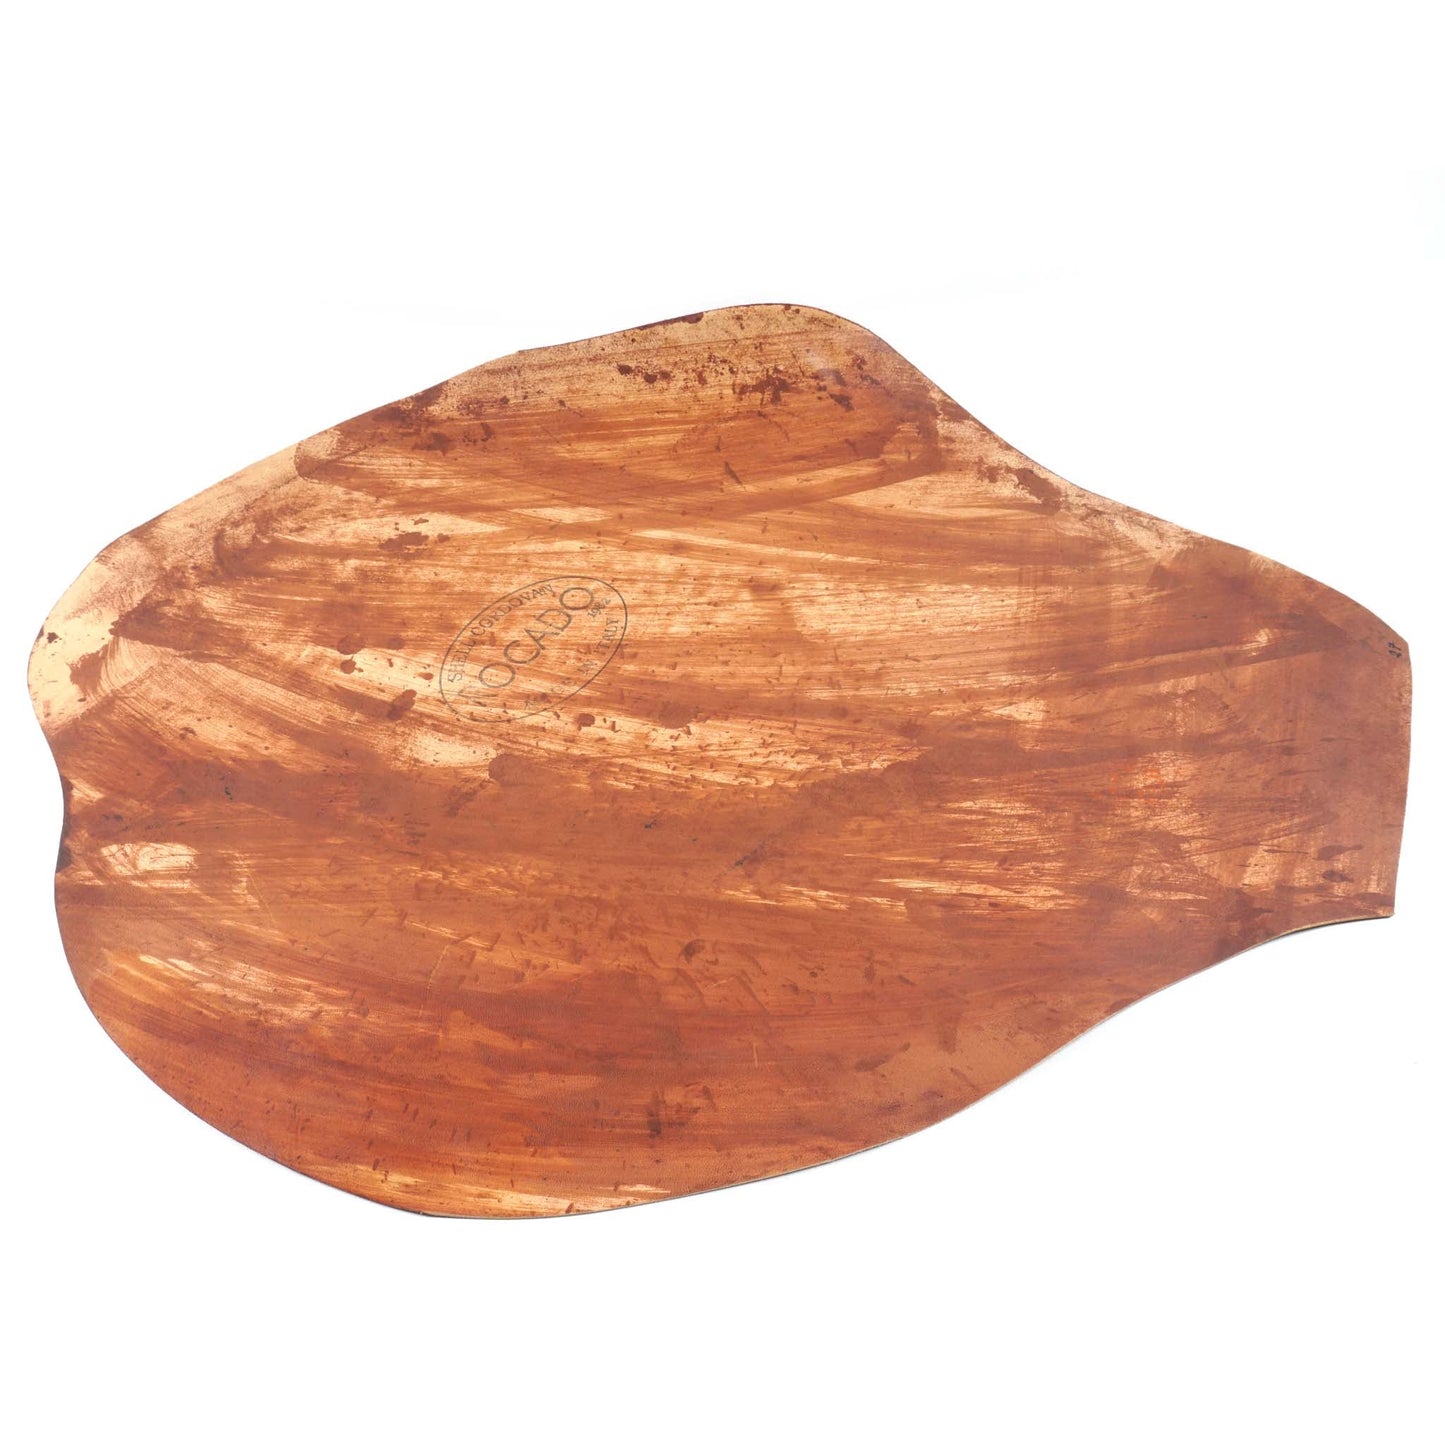 Rocado shell cordovan Marbled finish color Siena backside